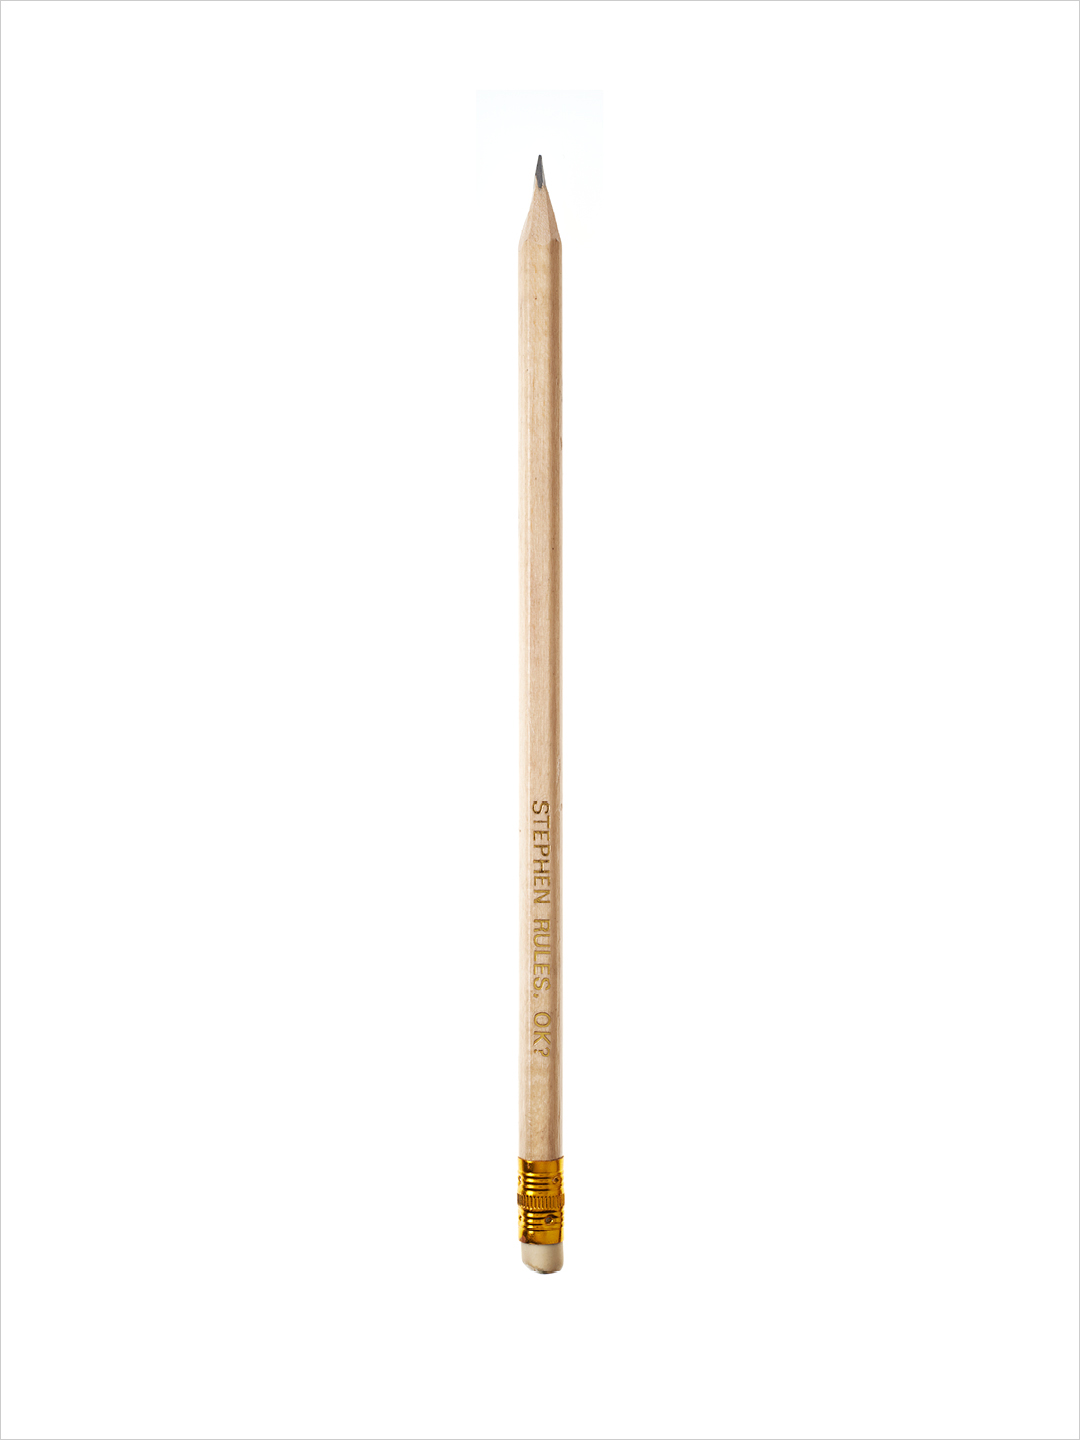 la matita di Stephen Fry